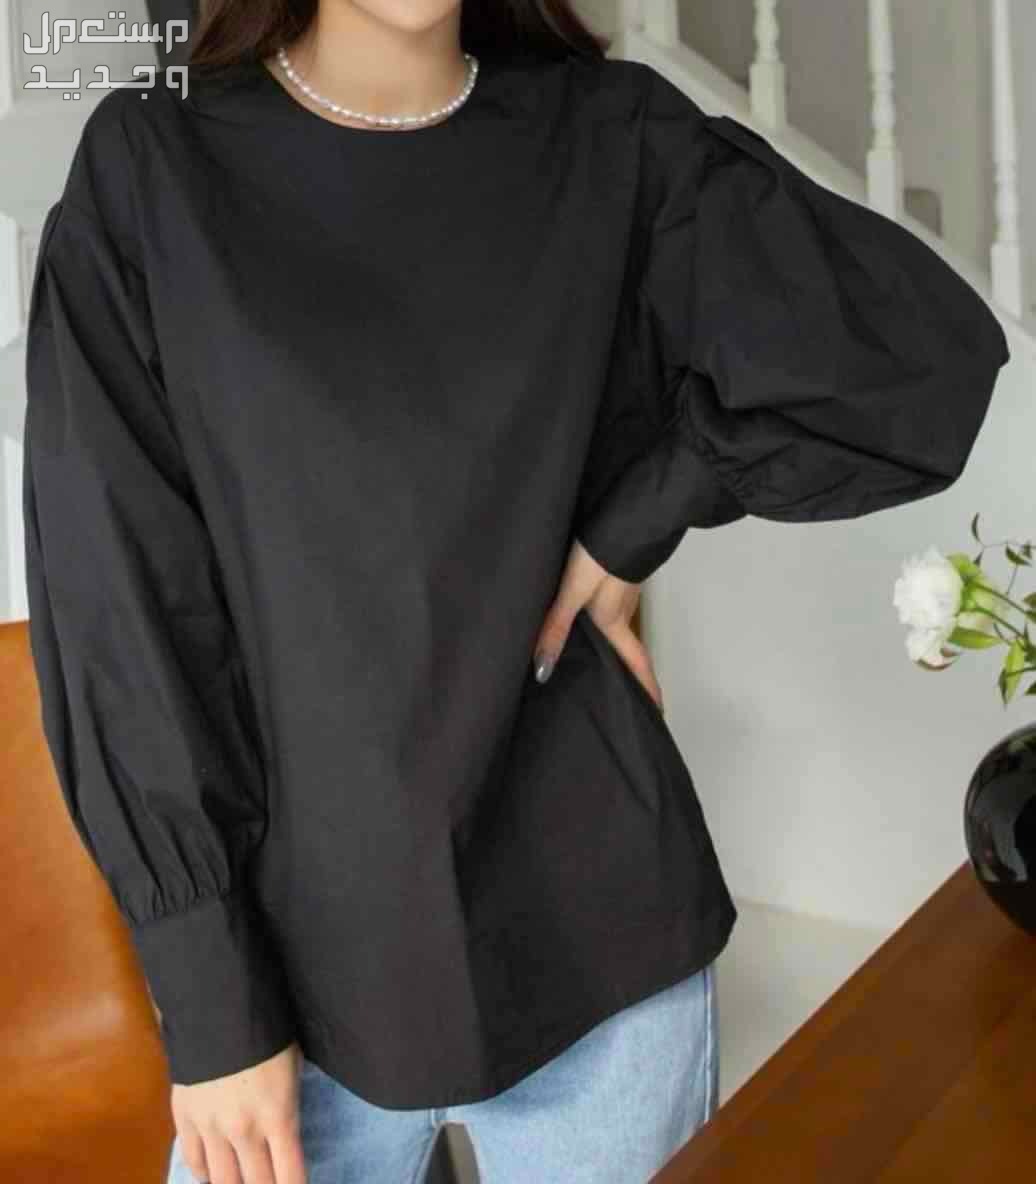 new black blouse size large